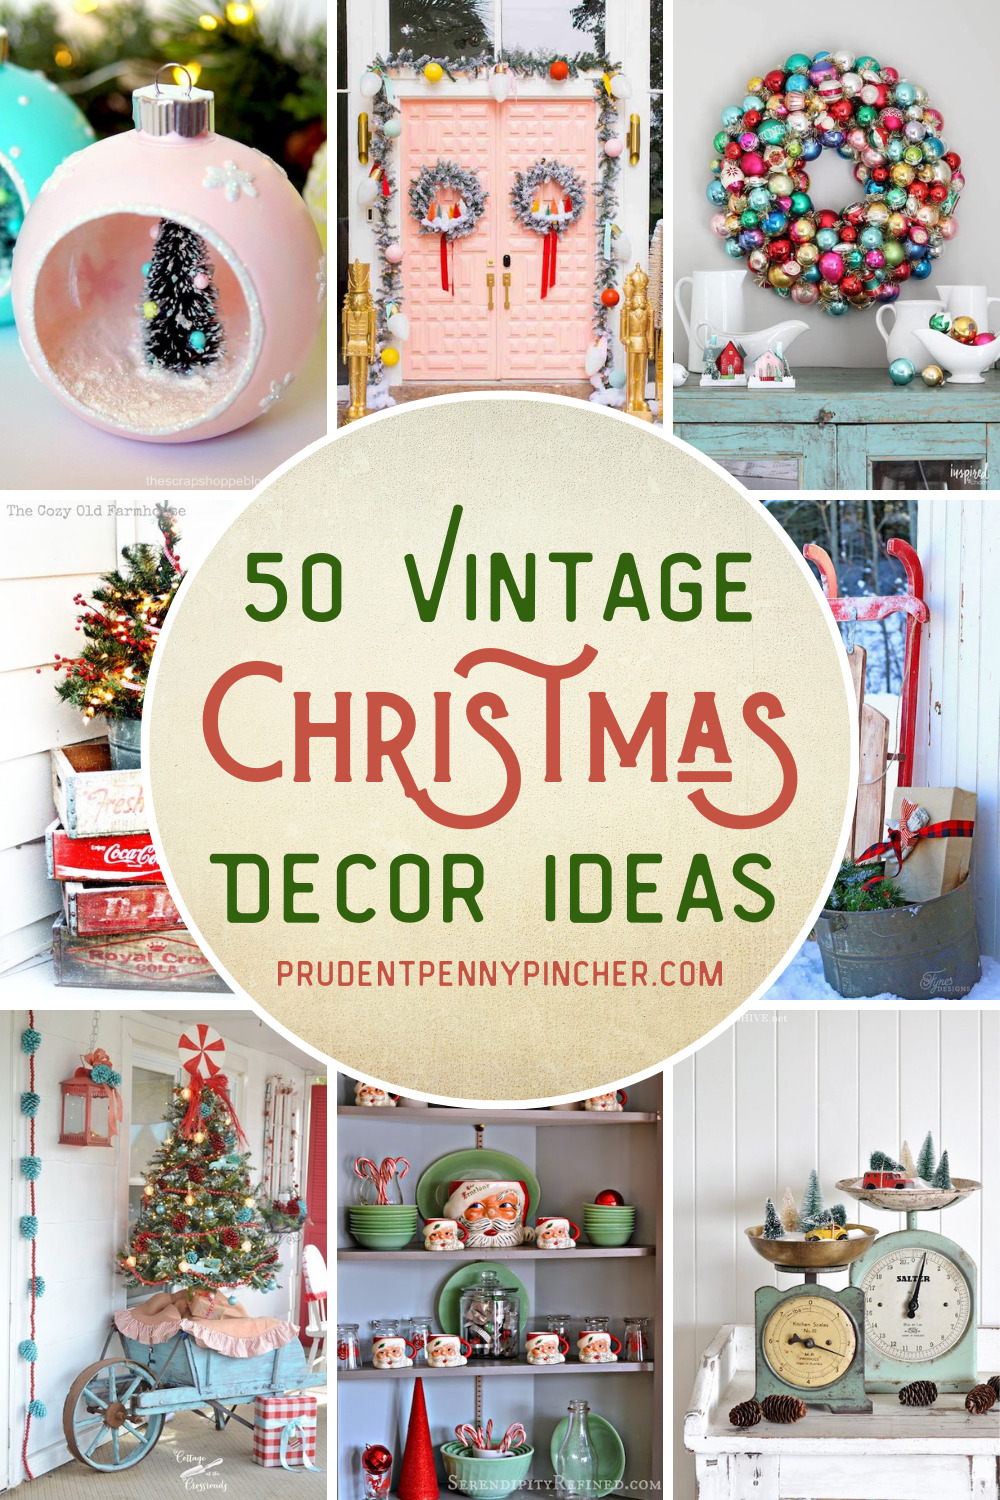 100 Vintage Christmas Decoration Ideas That are Nostalgia: Retro, Rustic 